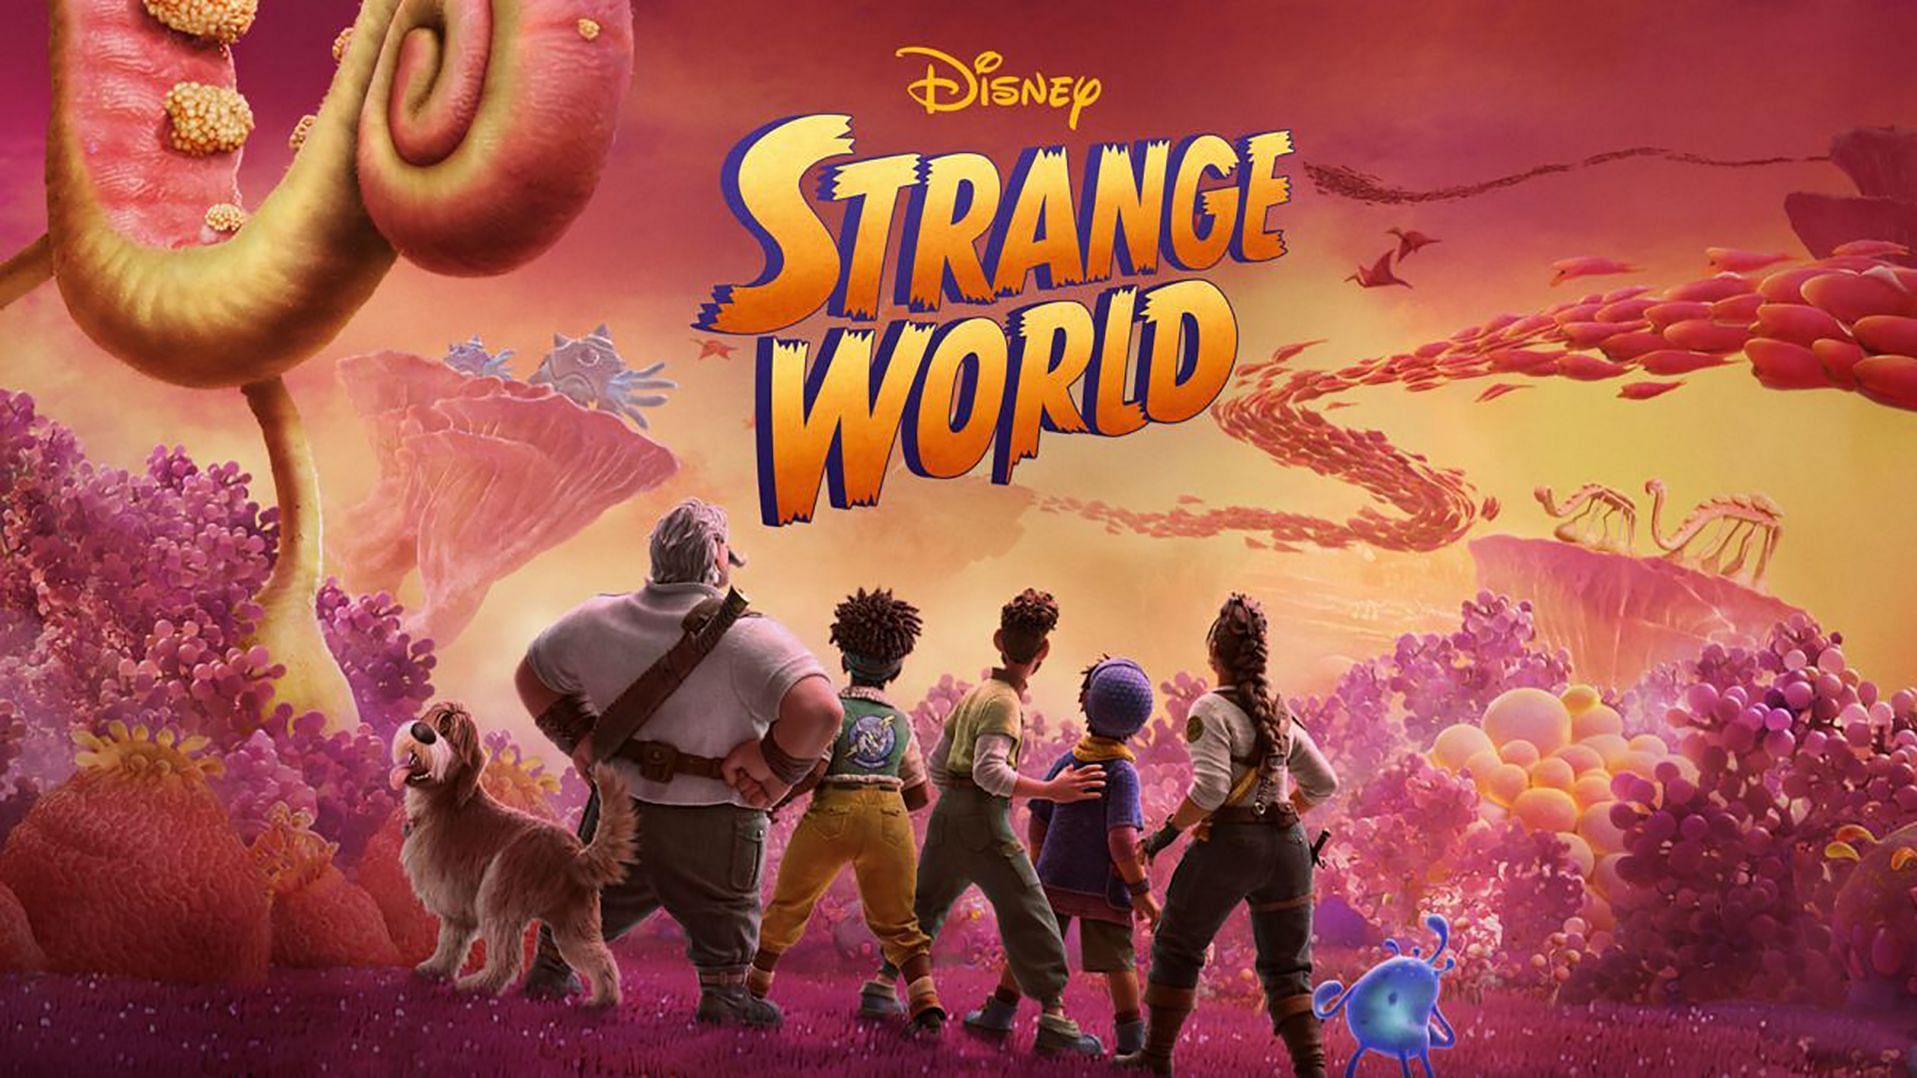 Strange World (Image via Disney Studios)